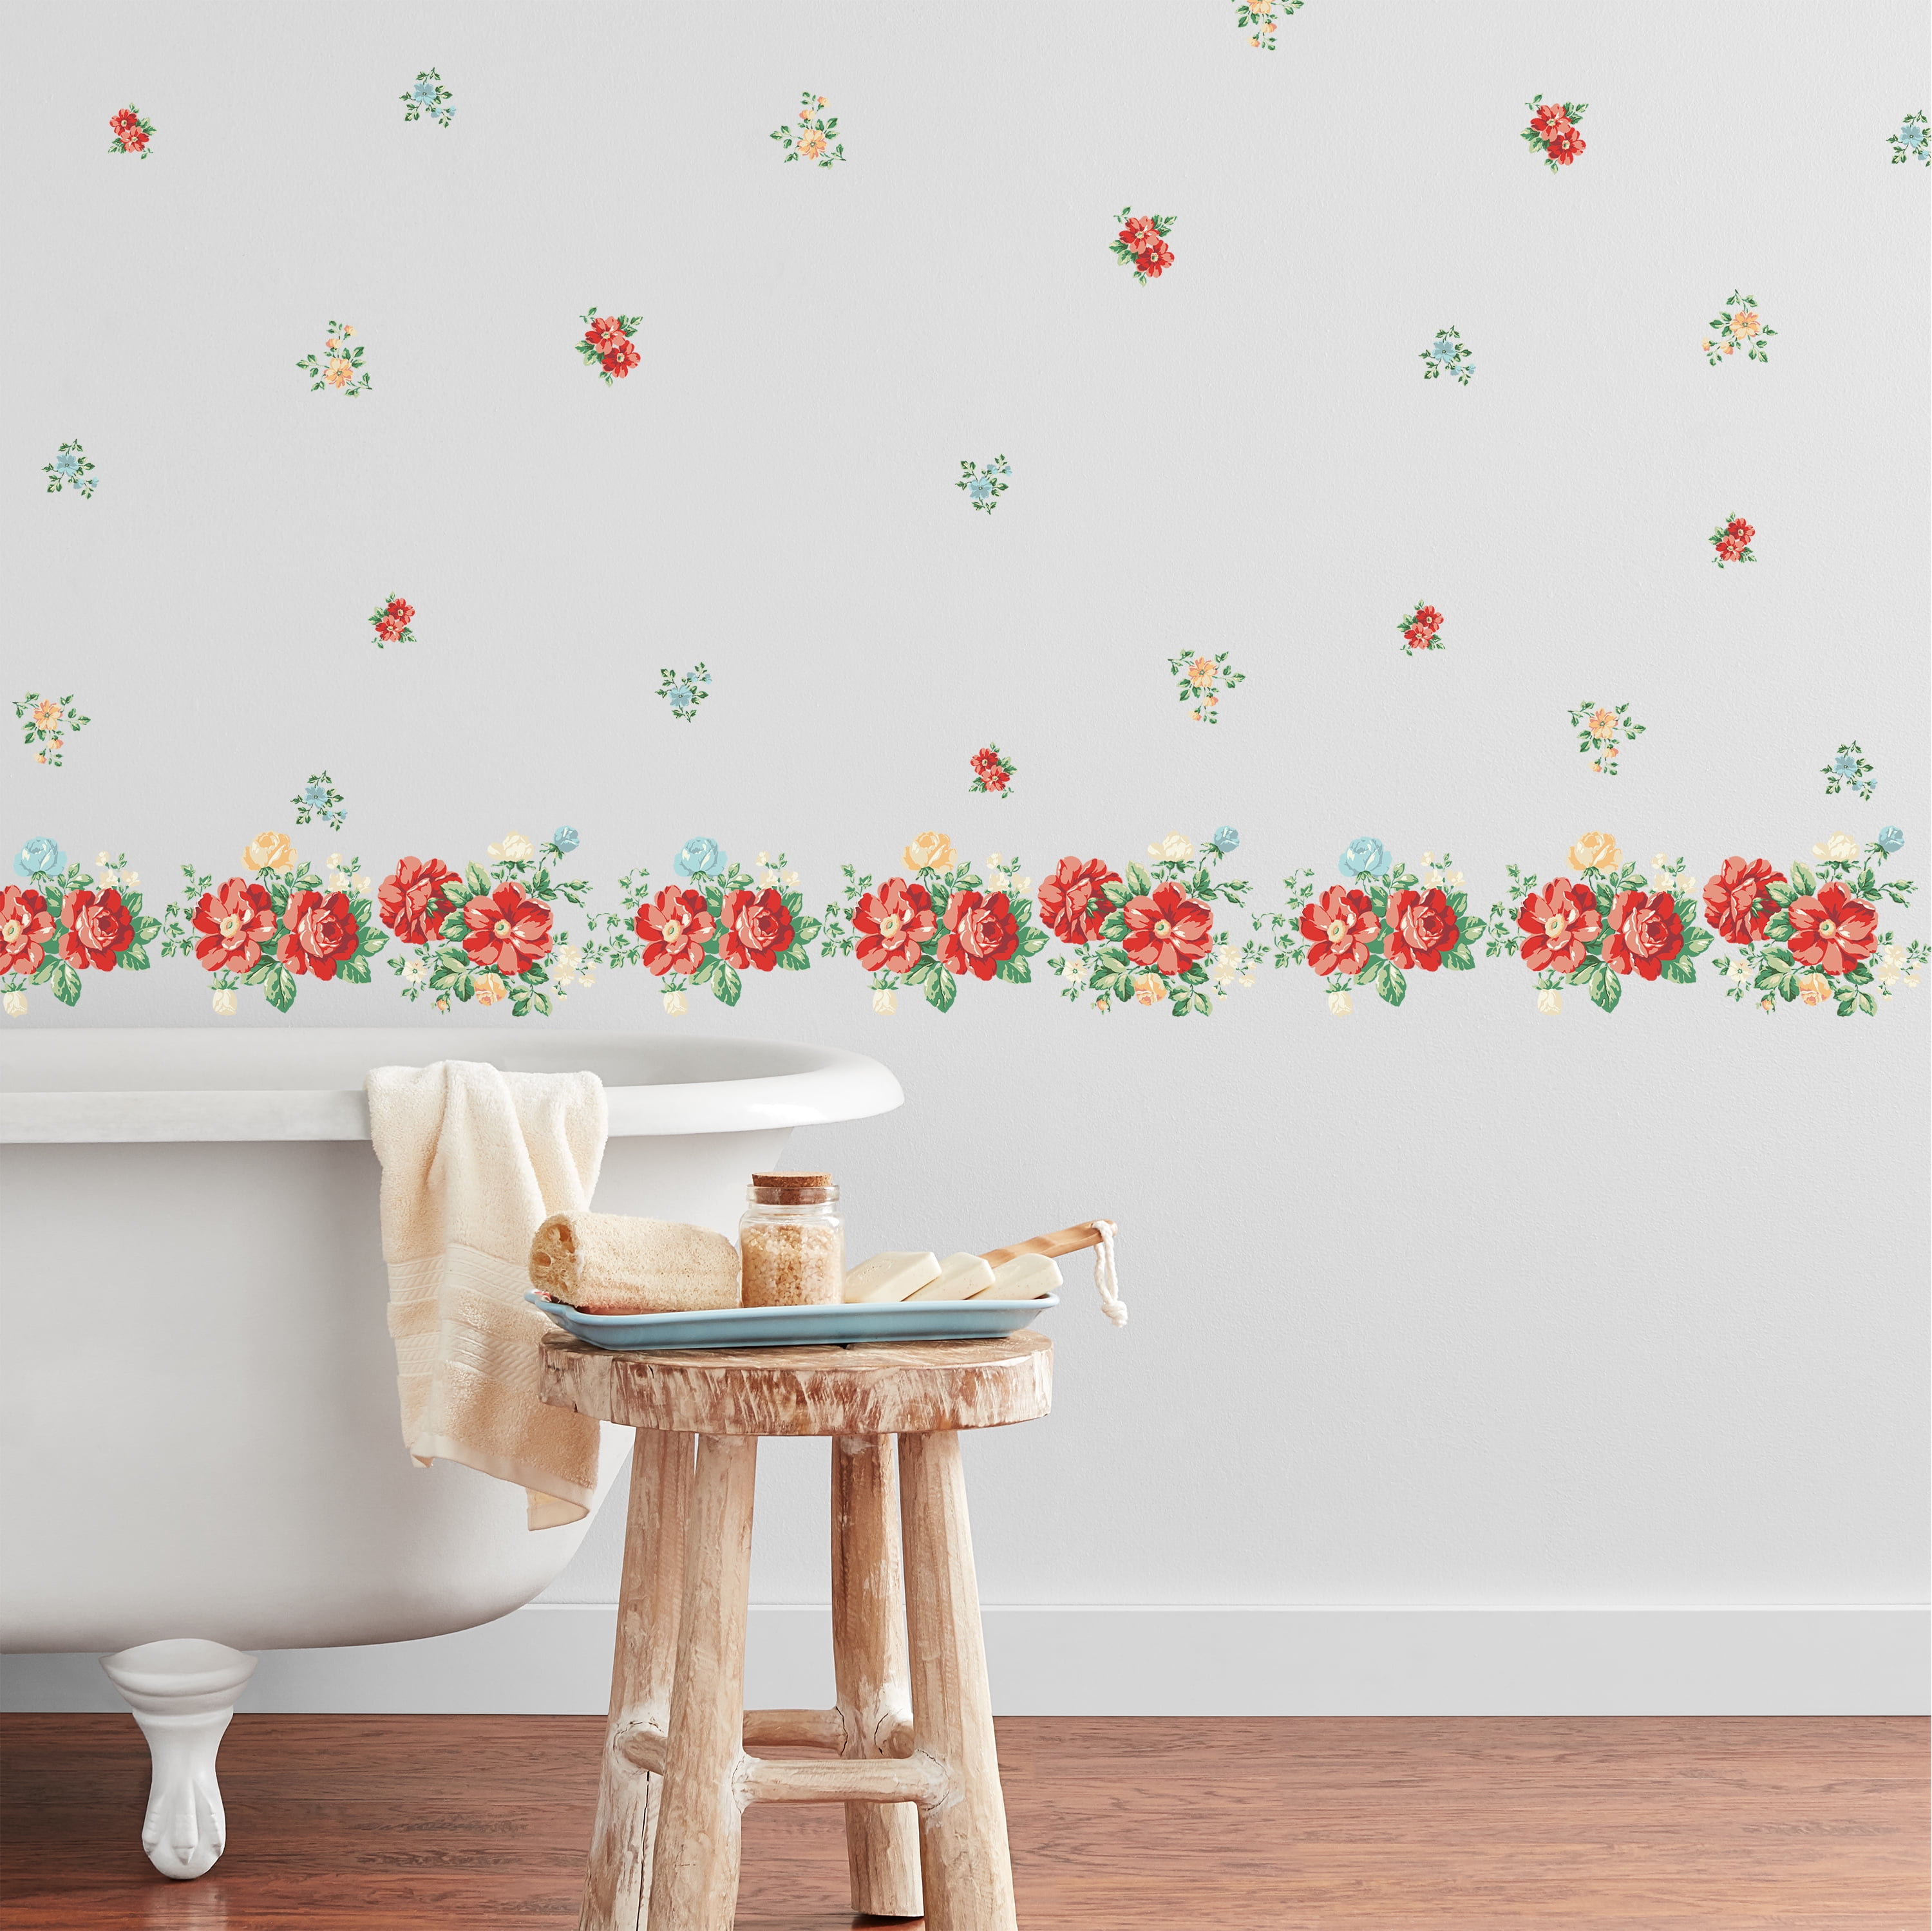 12 Fancy Rose Tile Transfers Easy Apply DIY Window Stickers Wall Decals 